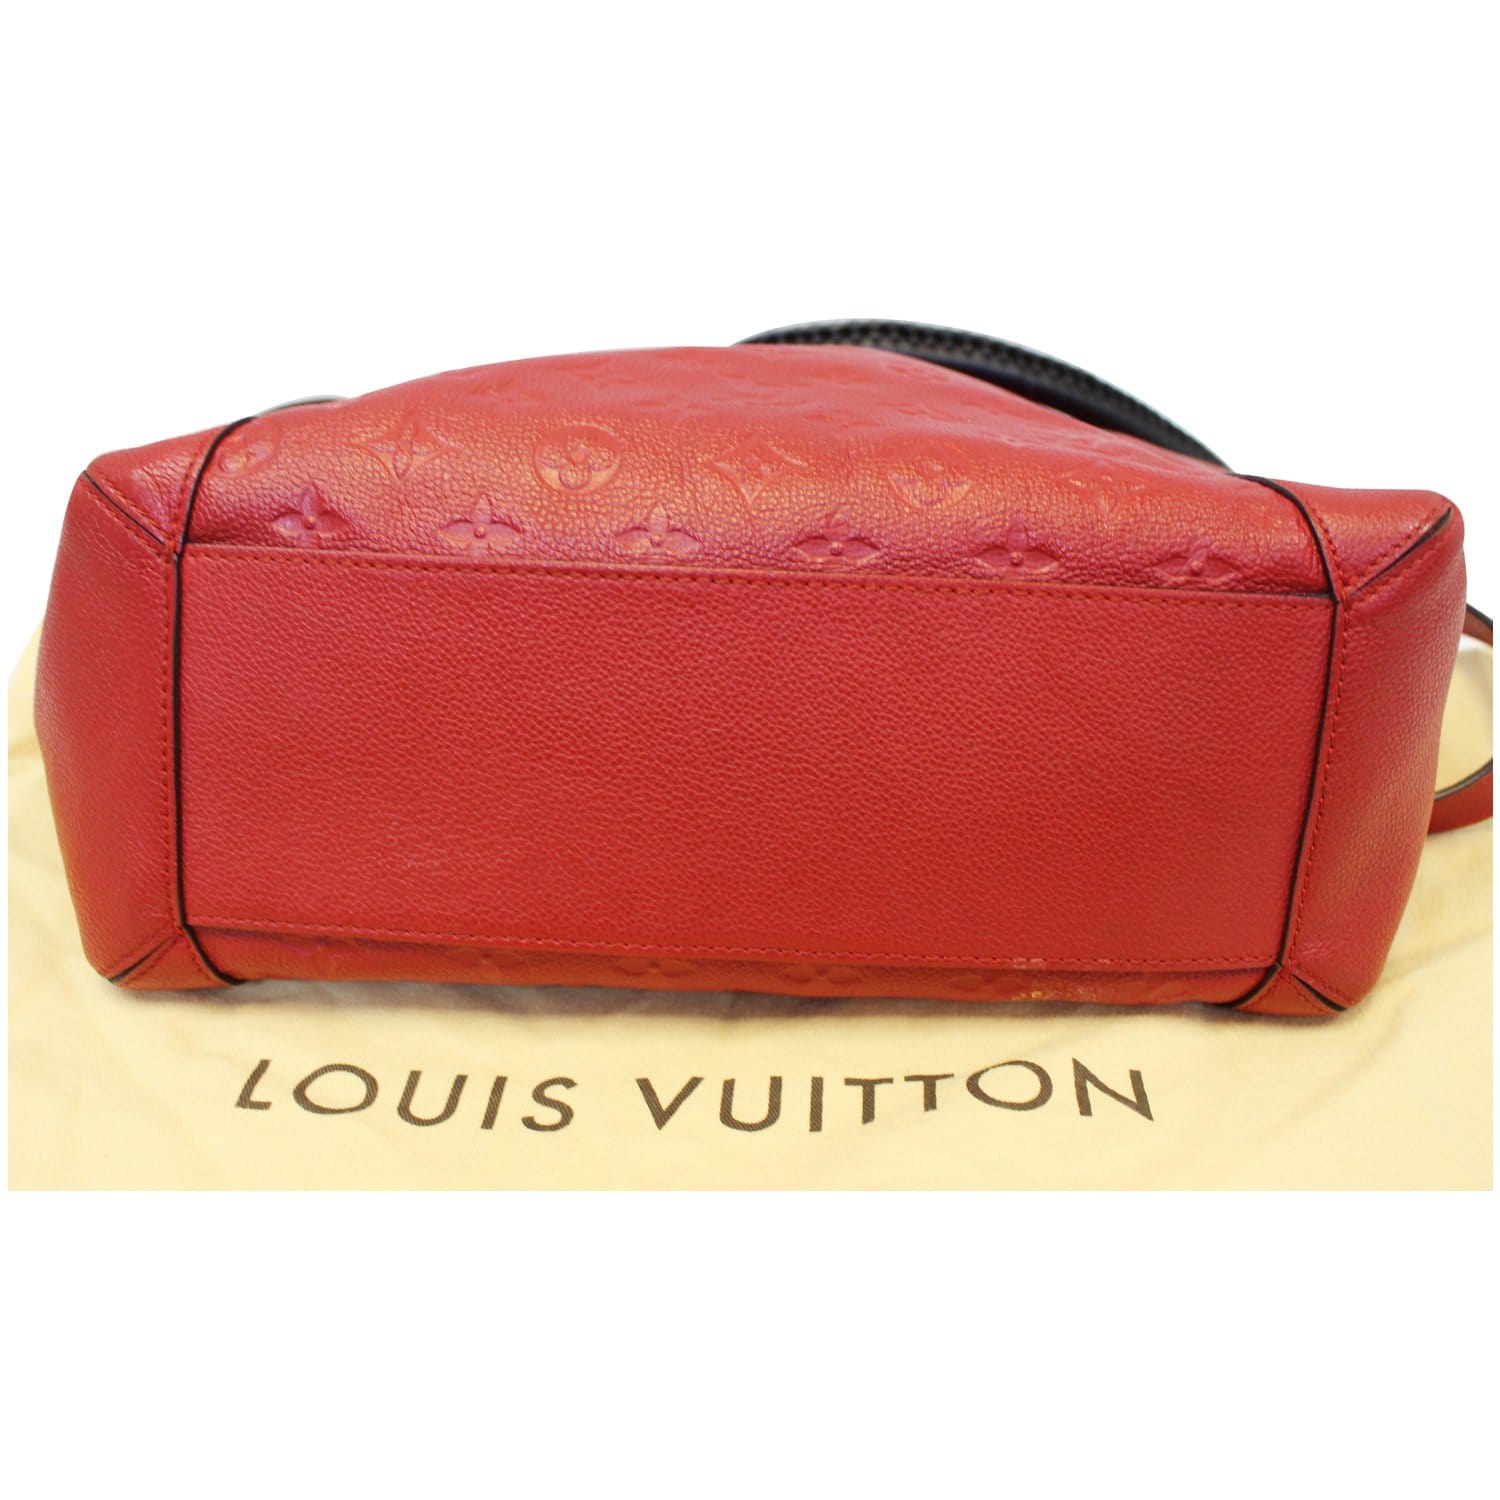 Louis Vuitton - Authenticated Bagatelle Handbag - Leather Red Plain for Women, Never Worn